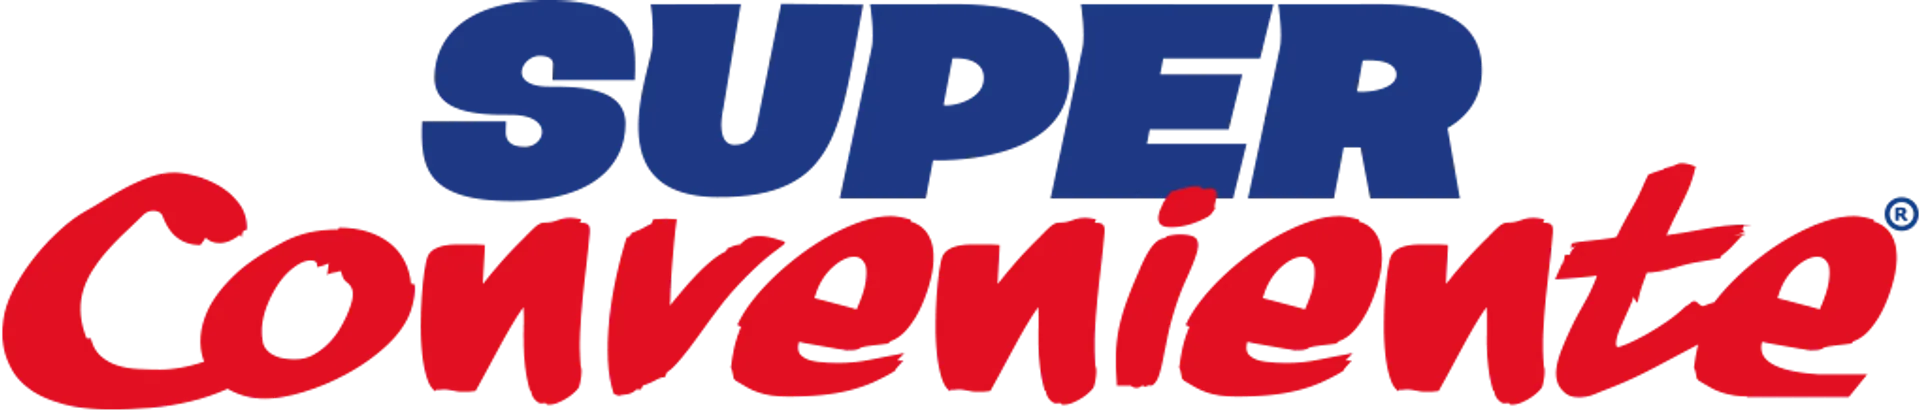 Iper Super Conveniente logo